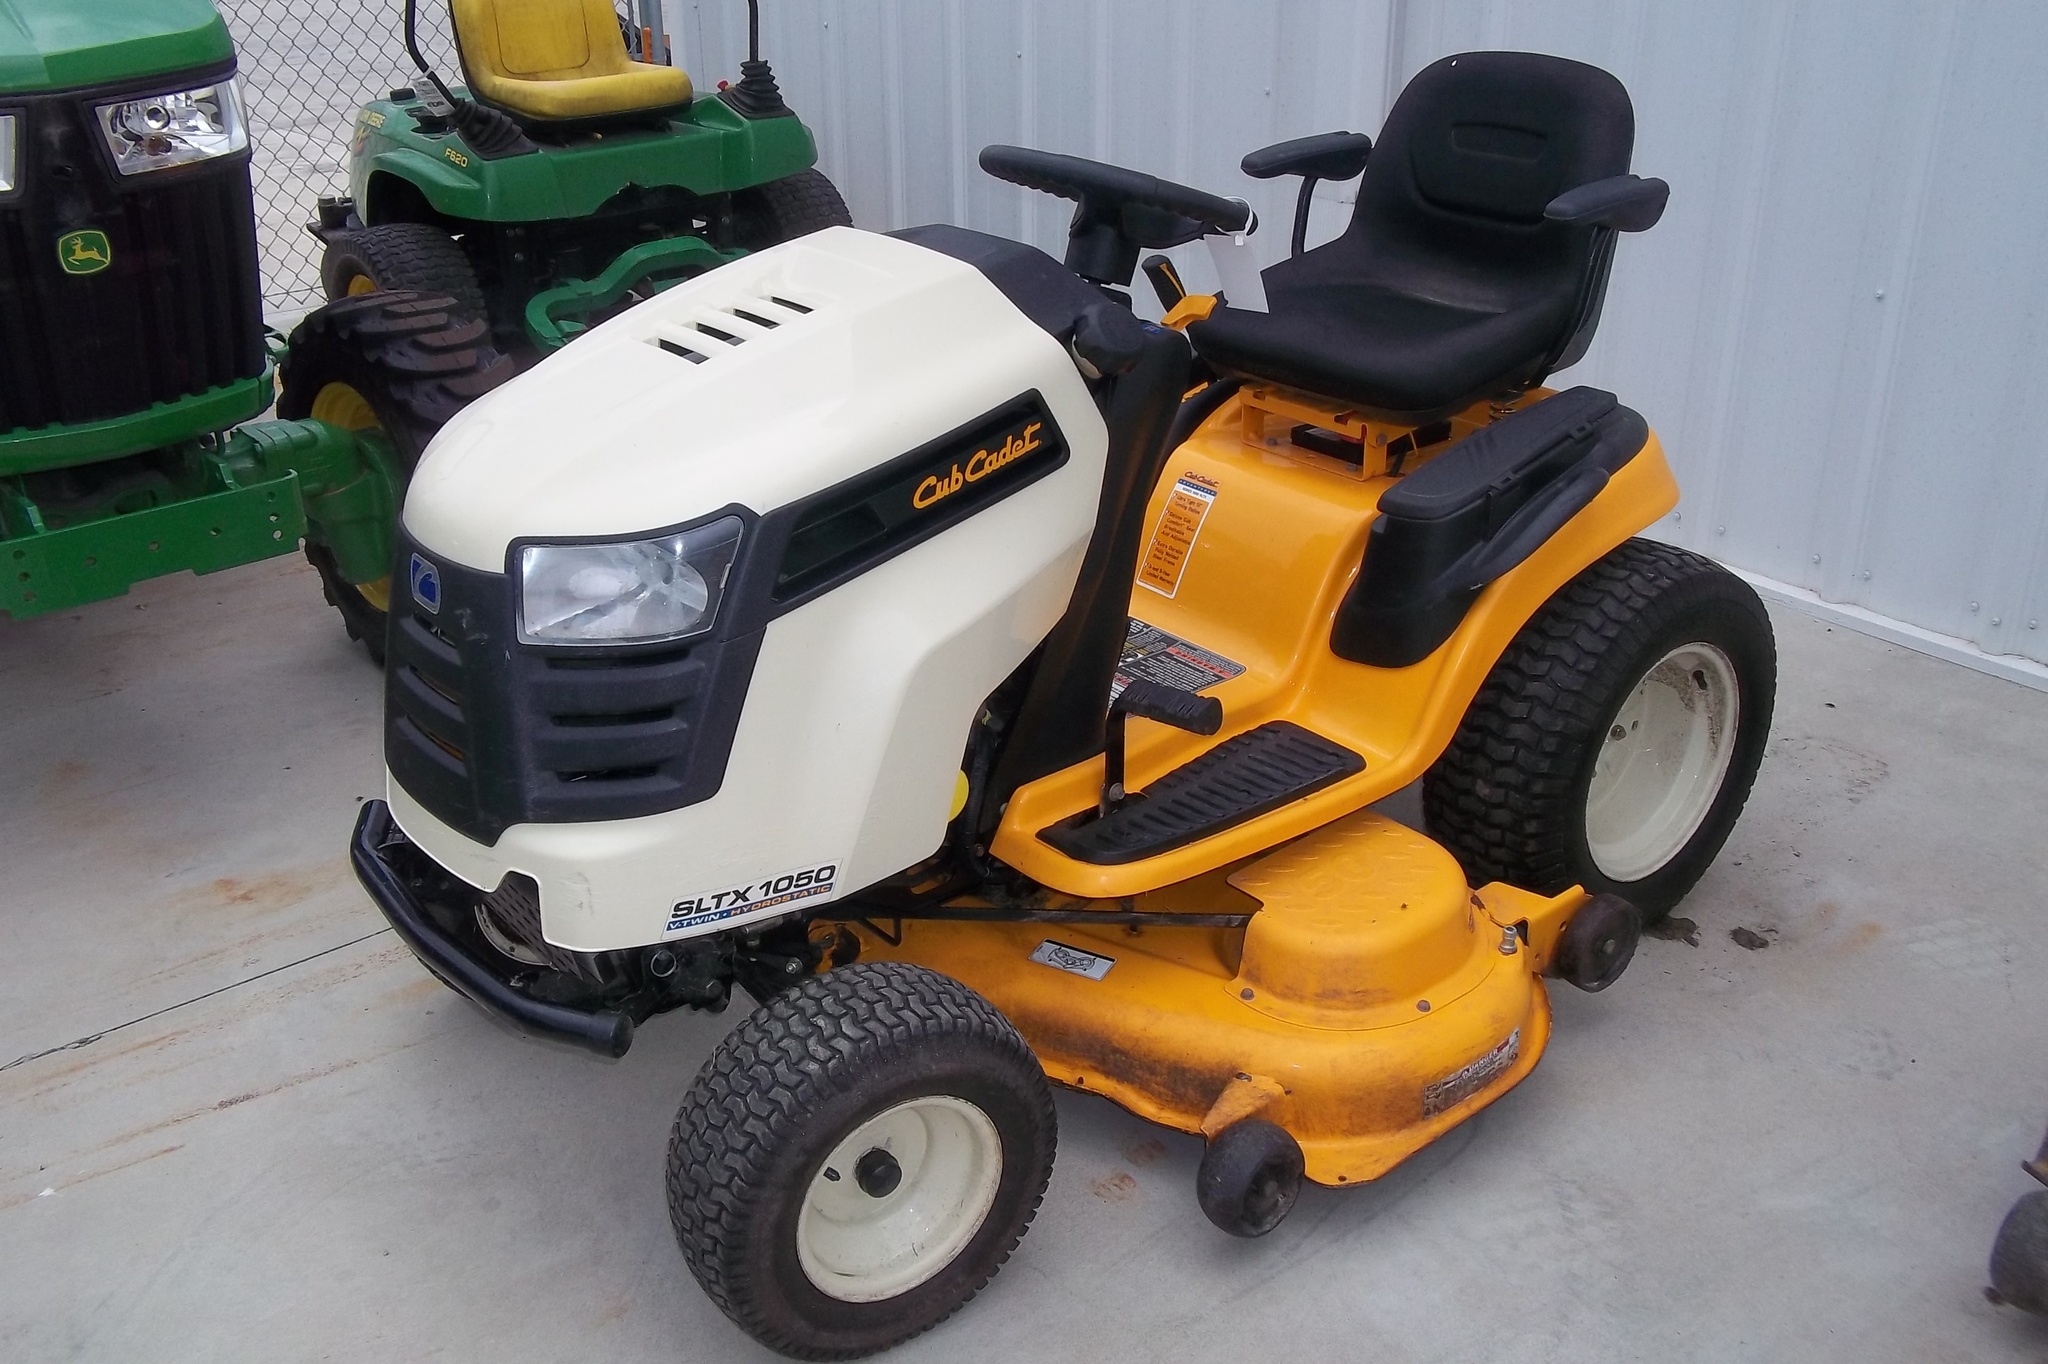 Cub Cadet STLX 1050 Lawn & Garden Tractors for Sale | [49400]